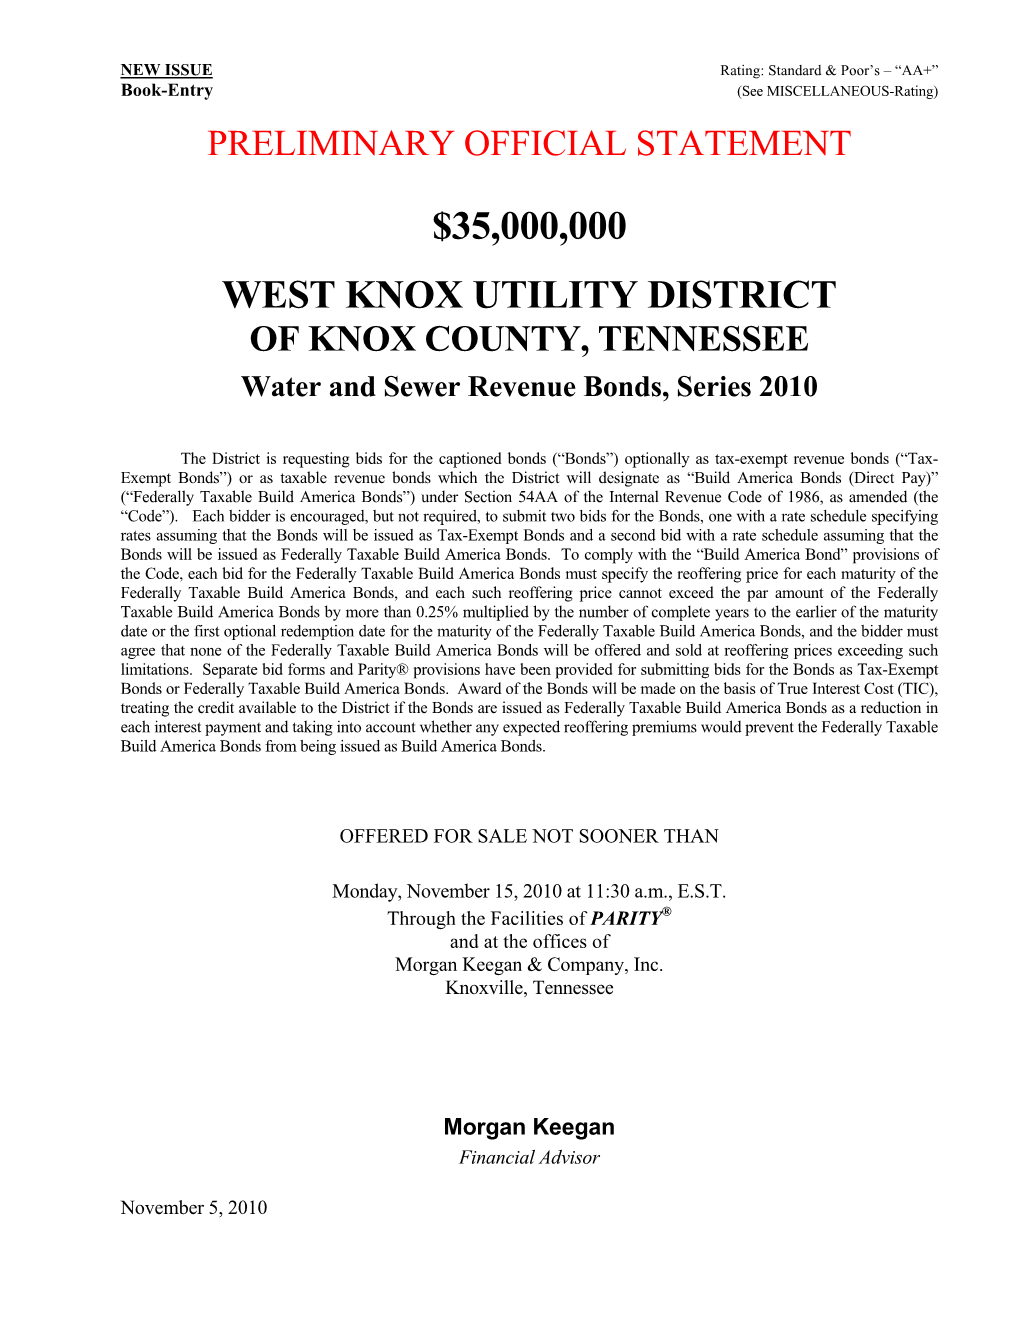 35000000 West Knox Utility District